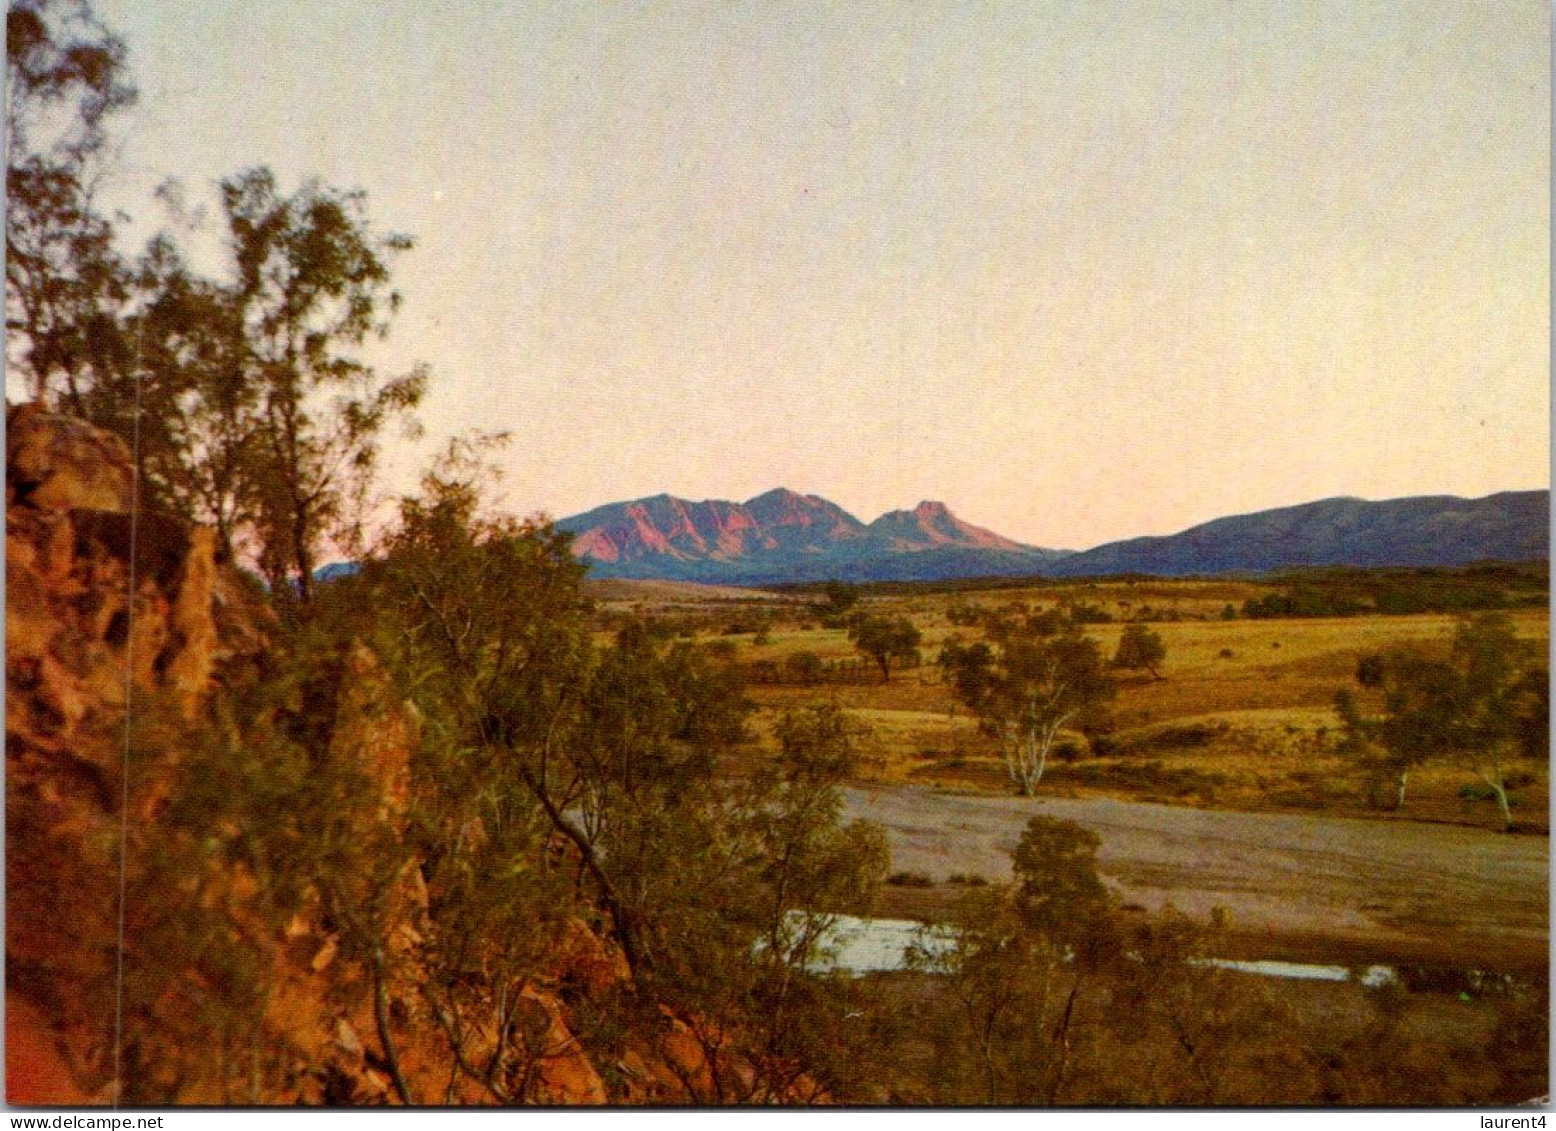 23-11-2023 (3 V 13) Australia - NT - Mt Sonder From Glen Helen Gorge - Uluru & The Olgas